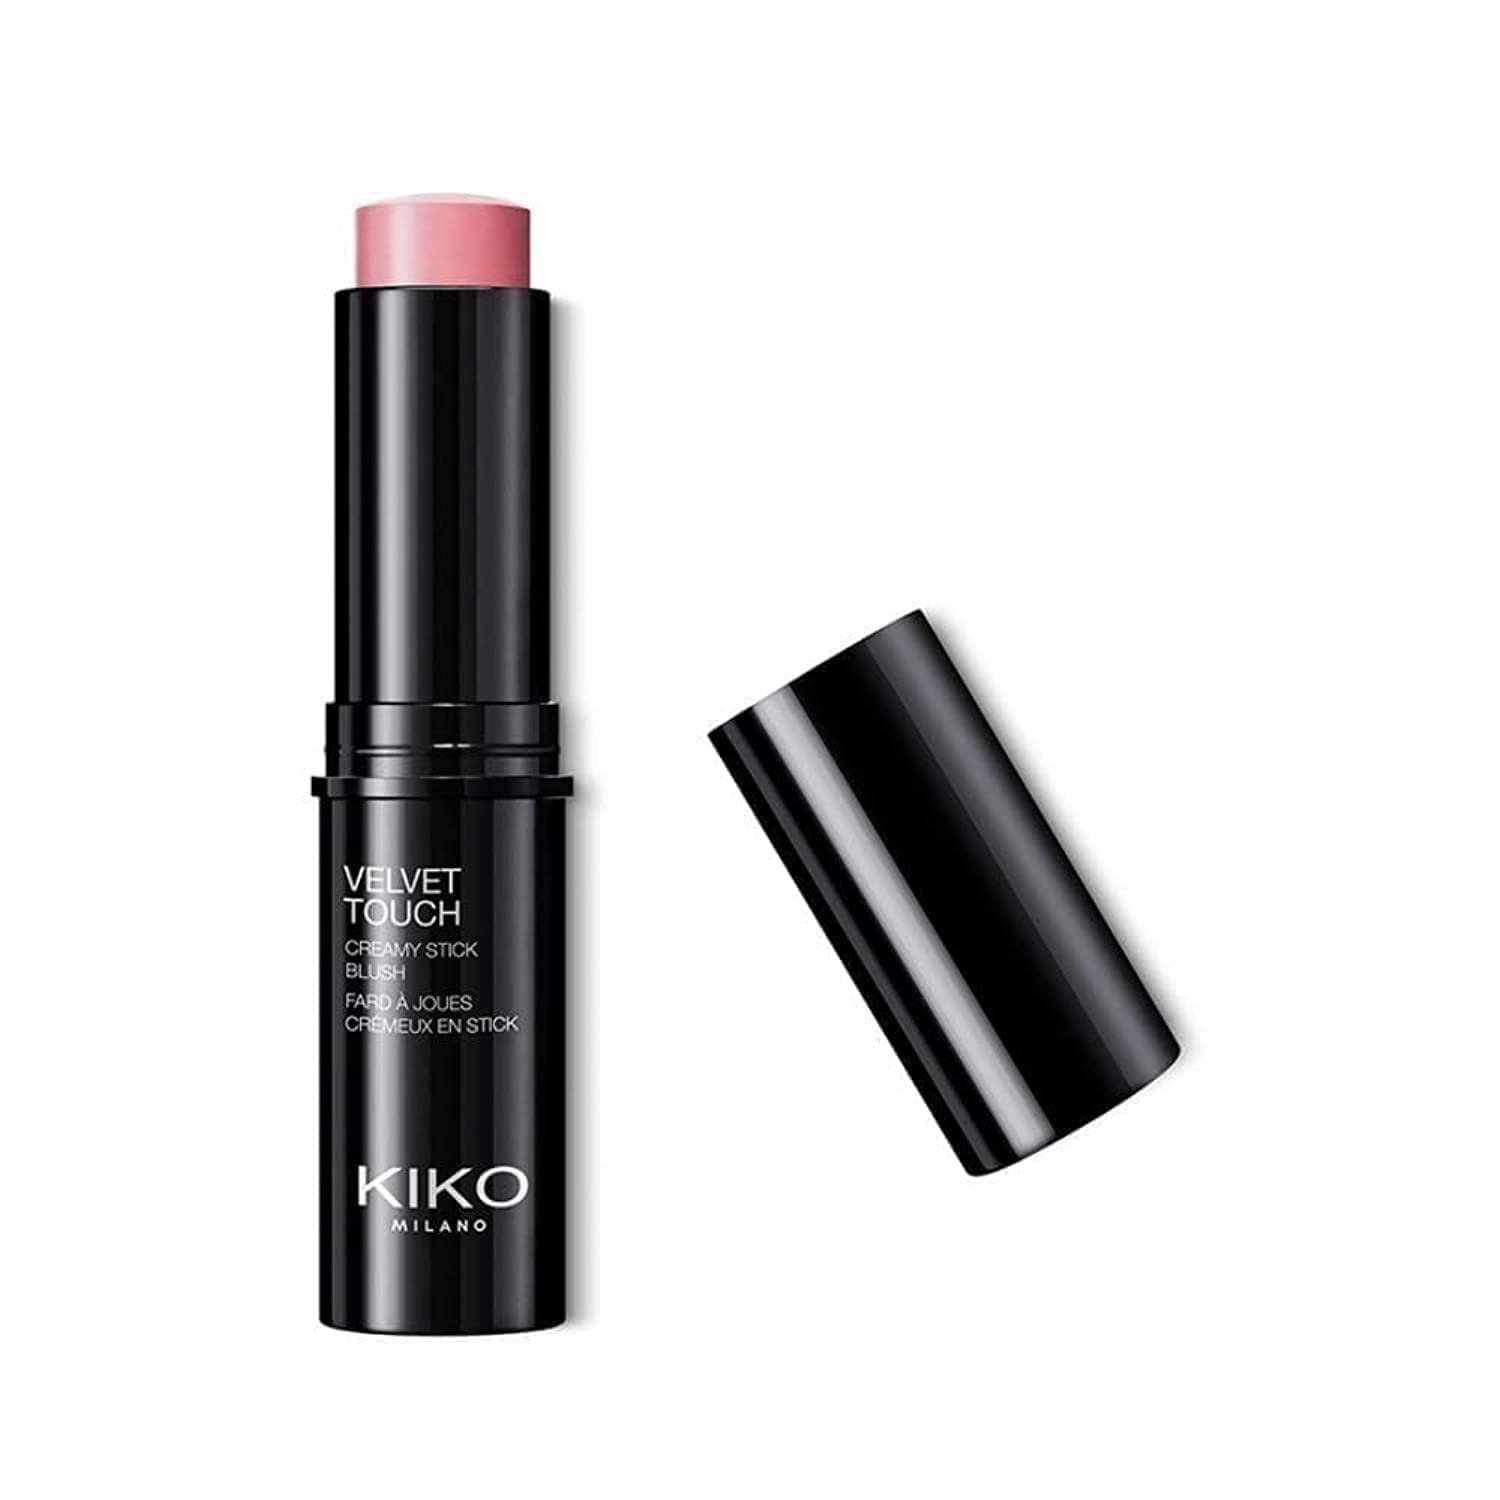 Kiko Milano Velvet Touch Creamy Stick Blush - 07 Natural Rose